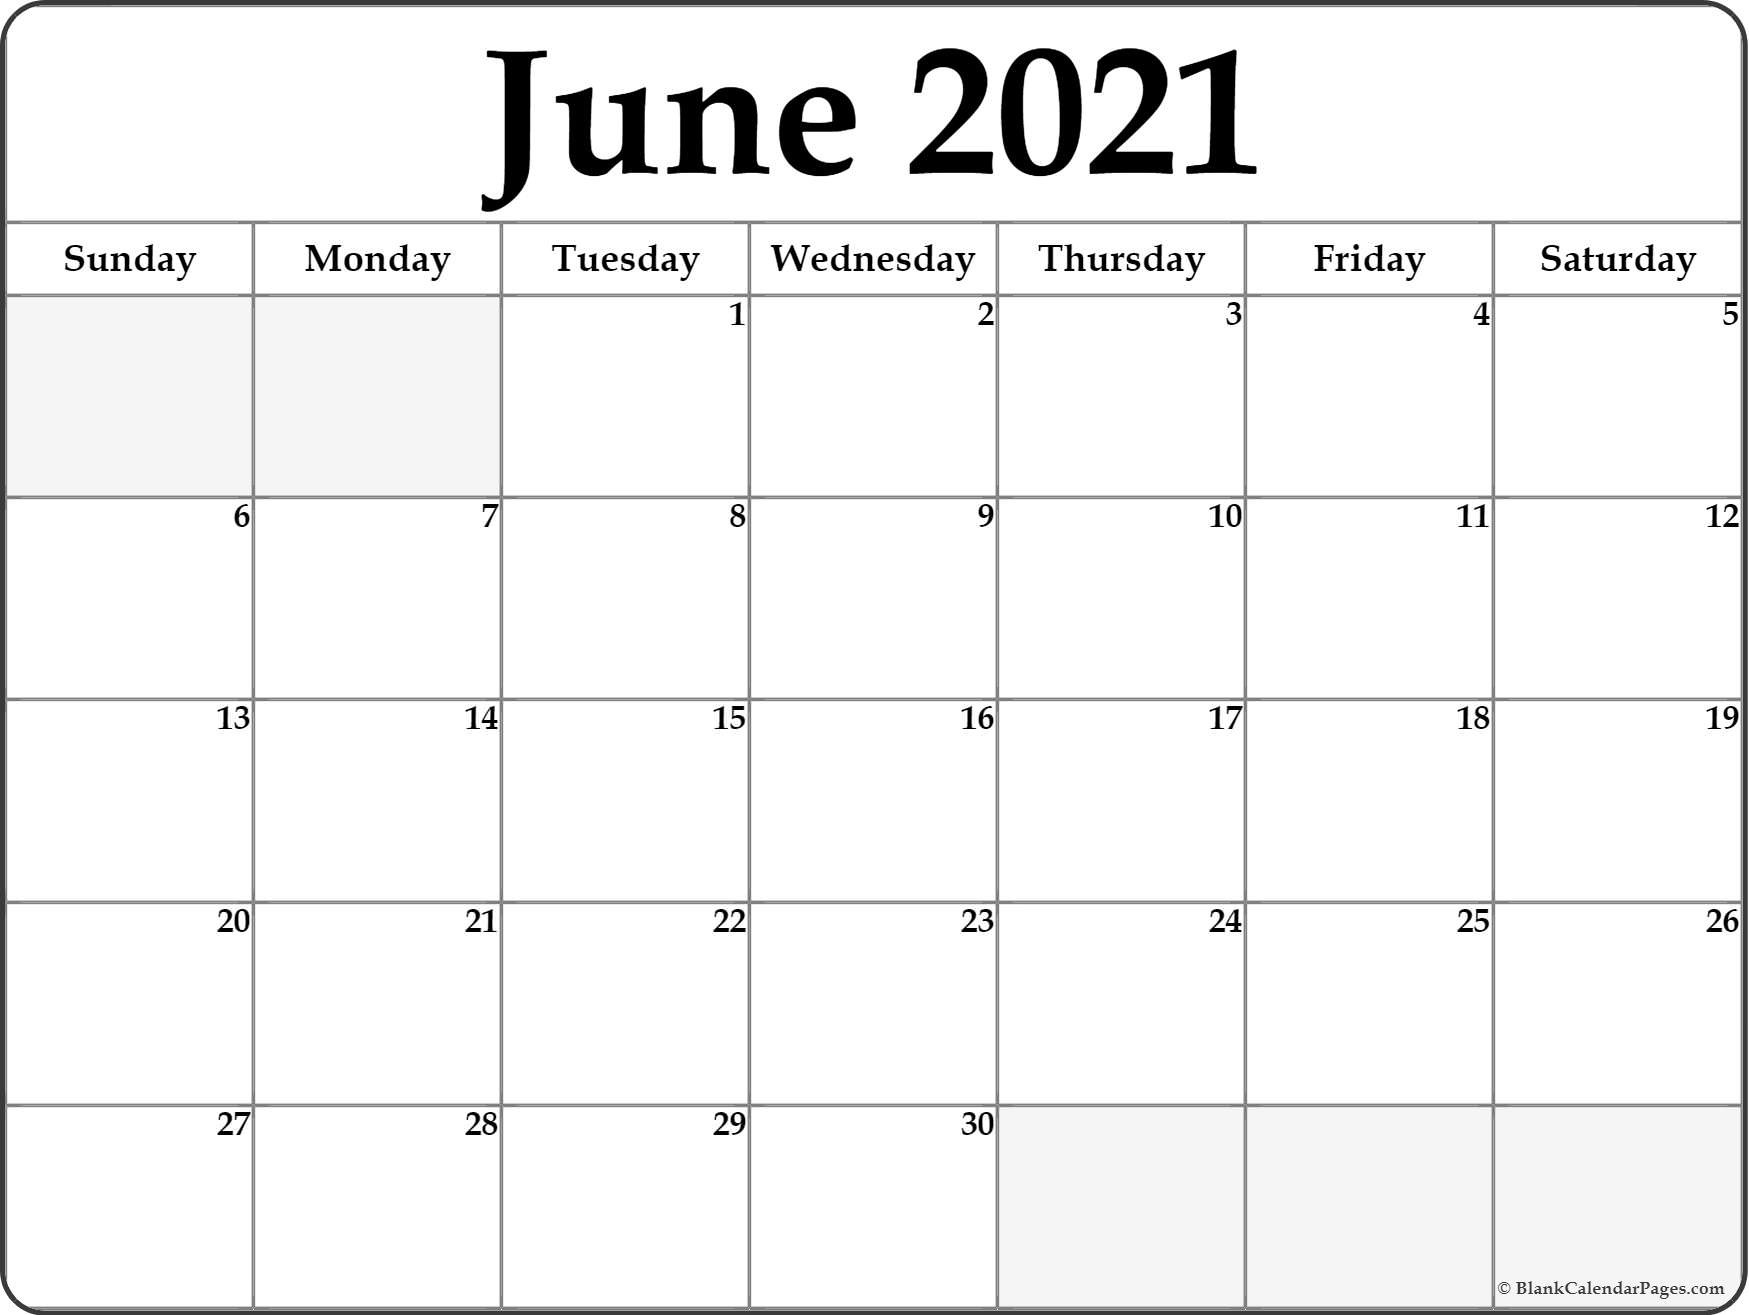 June 2021 Calendar | Free Printable Monthly Calendars-June 2021 Calendar List Template